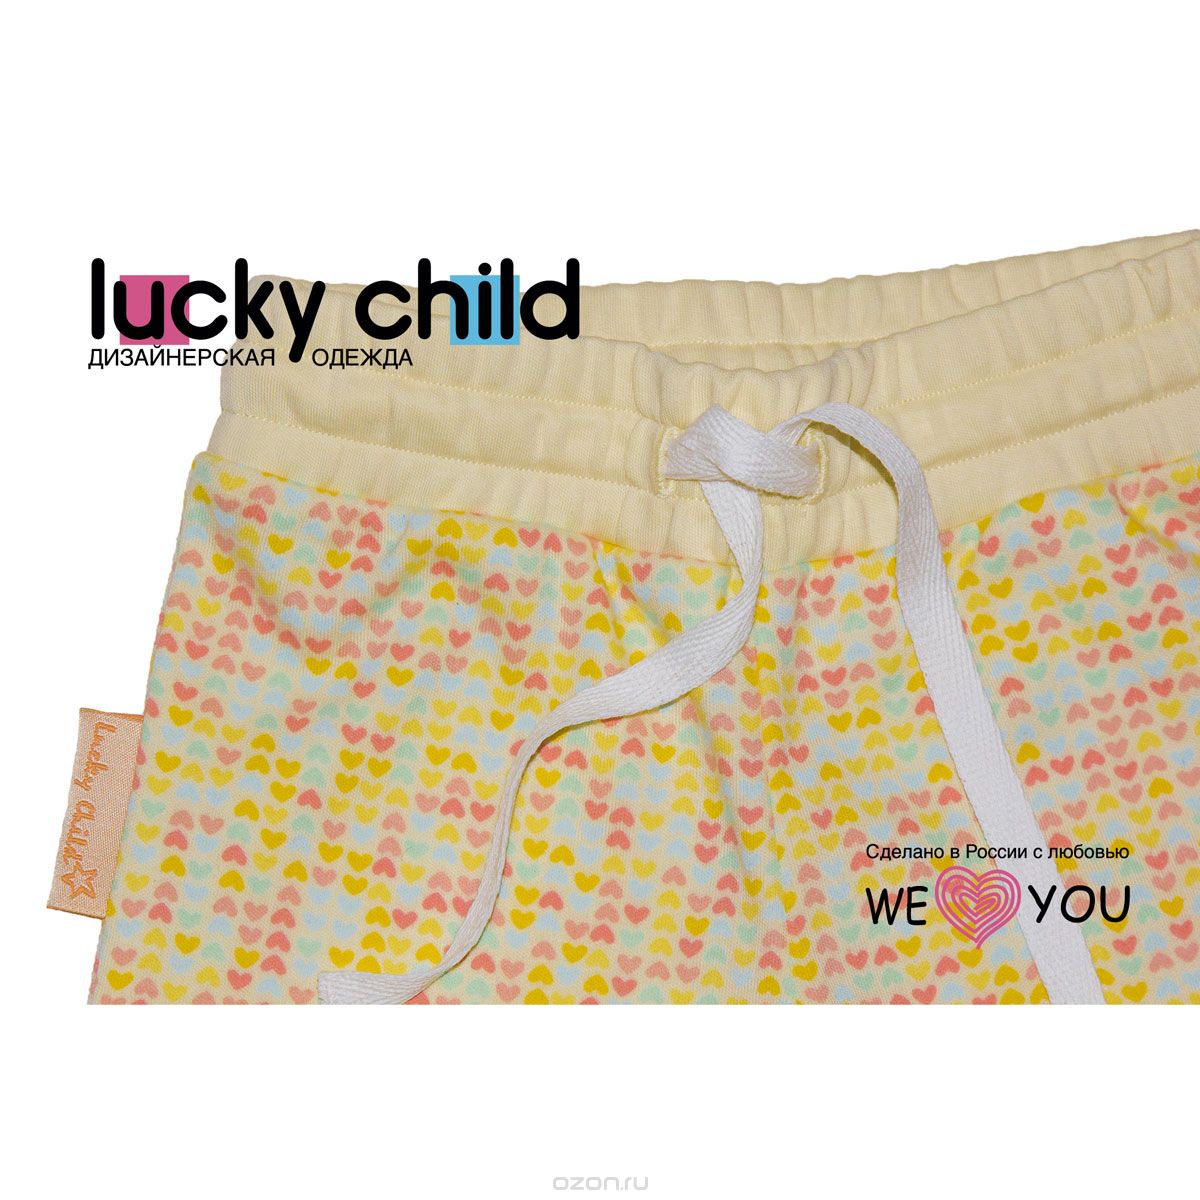    Lucky Child, : , , . 12-402.  80/86